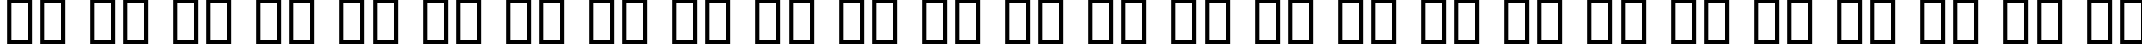 Пример написания английского алфавита шрифтом B Tawfig Outline